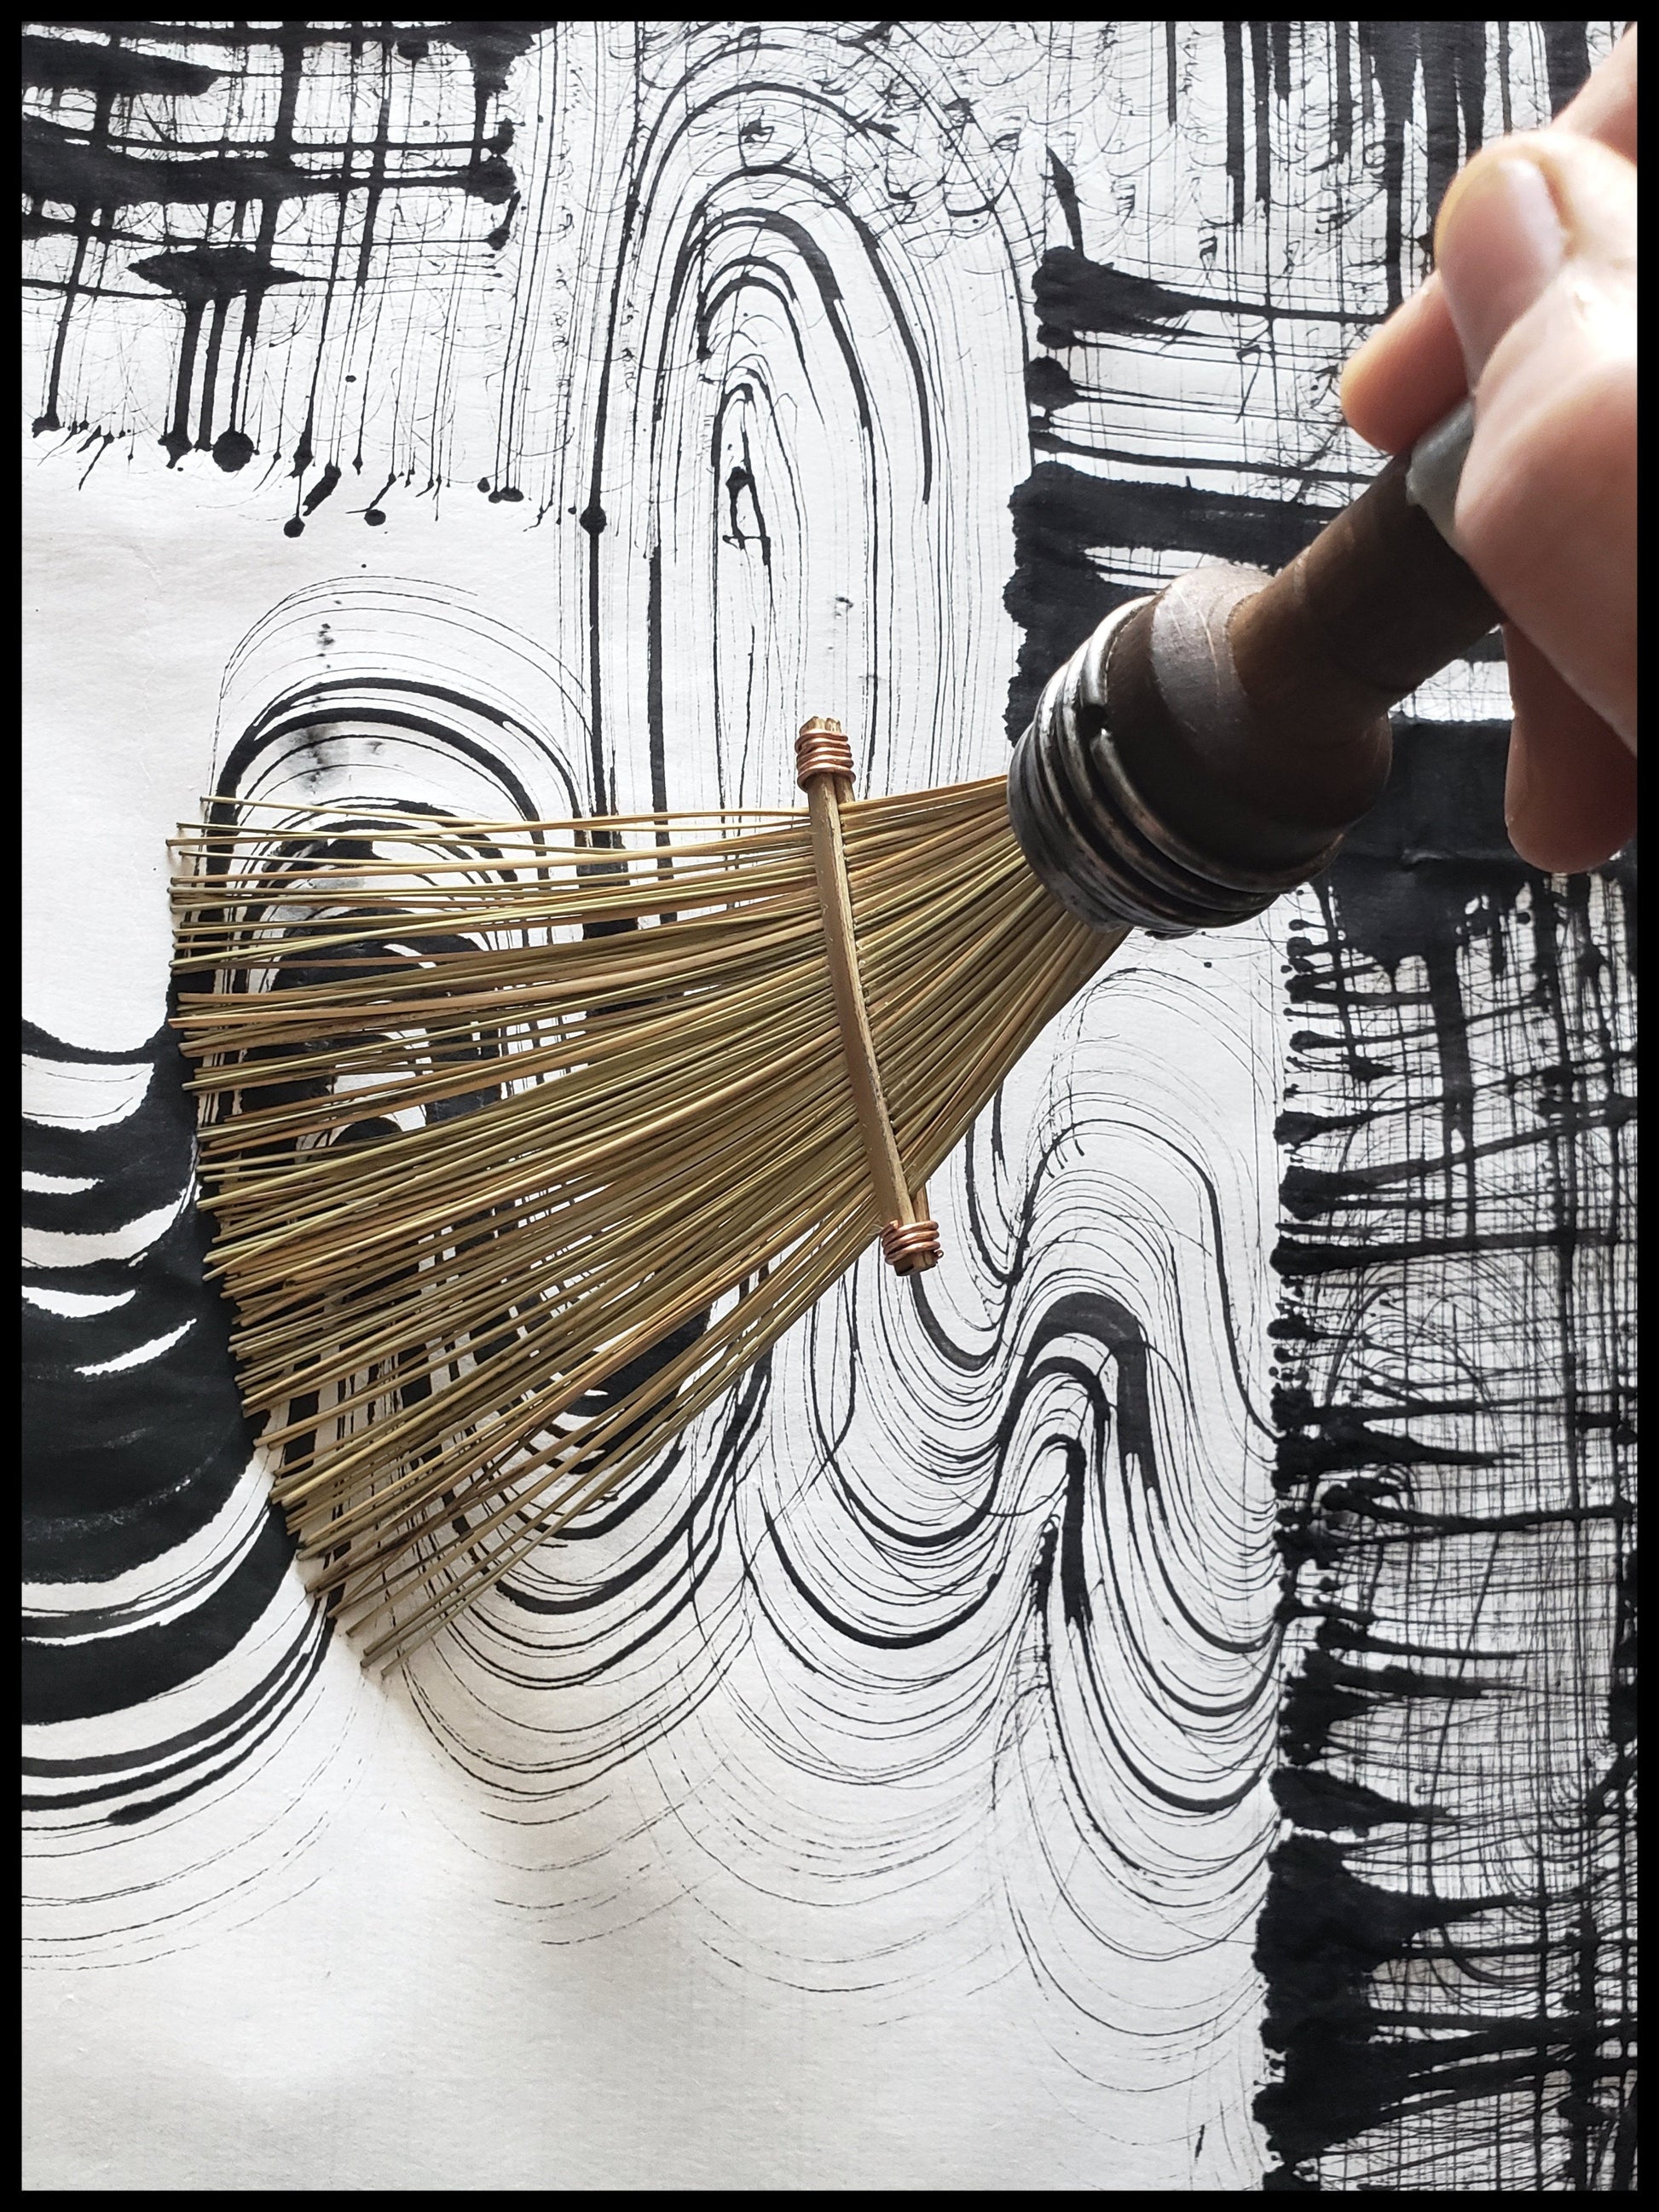 Fan-shaped brush stock photo. Image of artwork, painting - 11350838